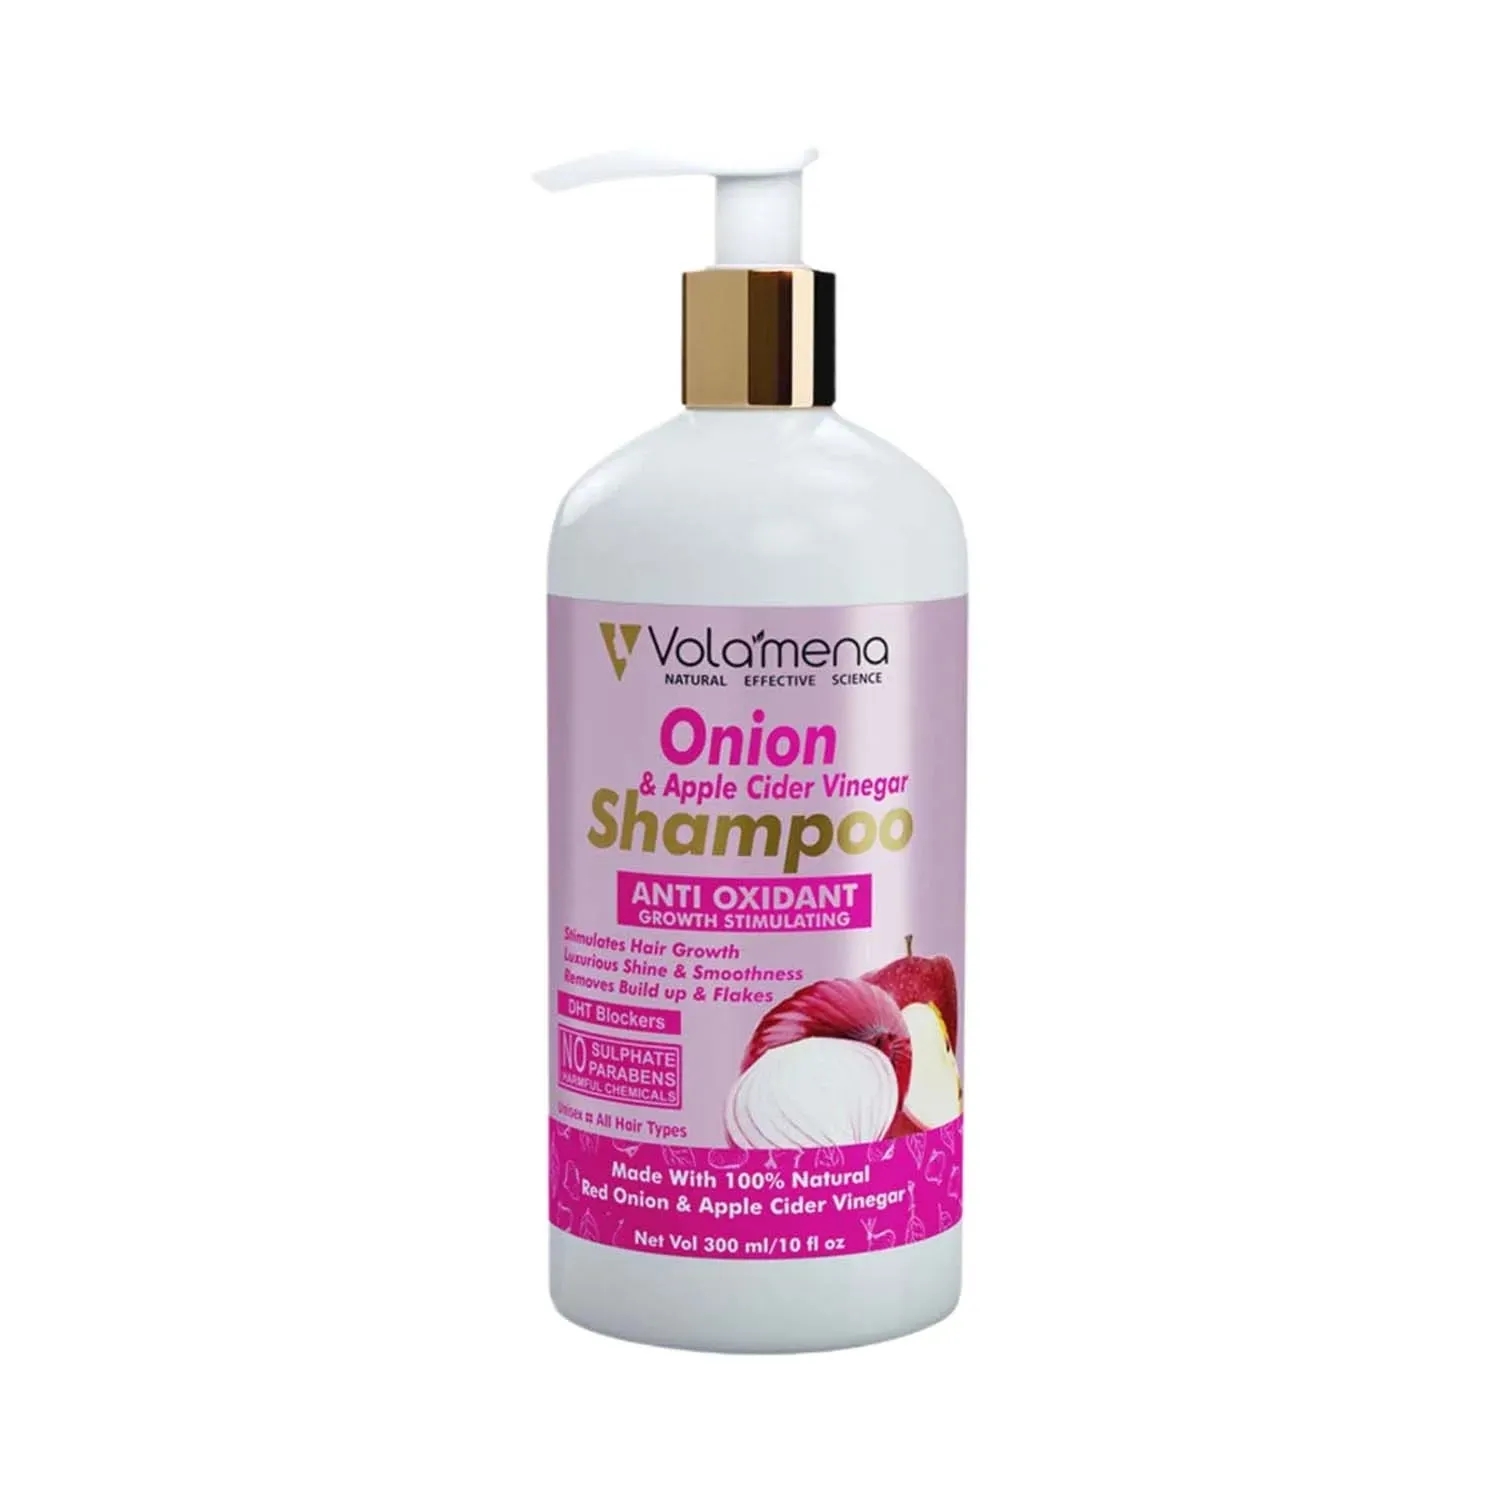 Volamena Onion Apple Cider Vinegar Shampoo With Antioxidant Growth Stimulating (300ml)